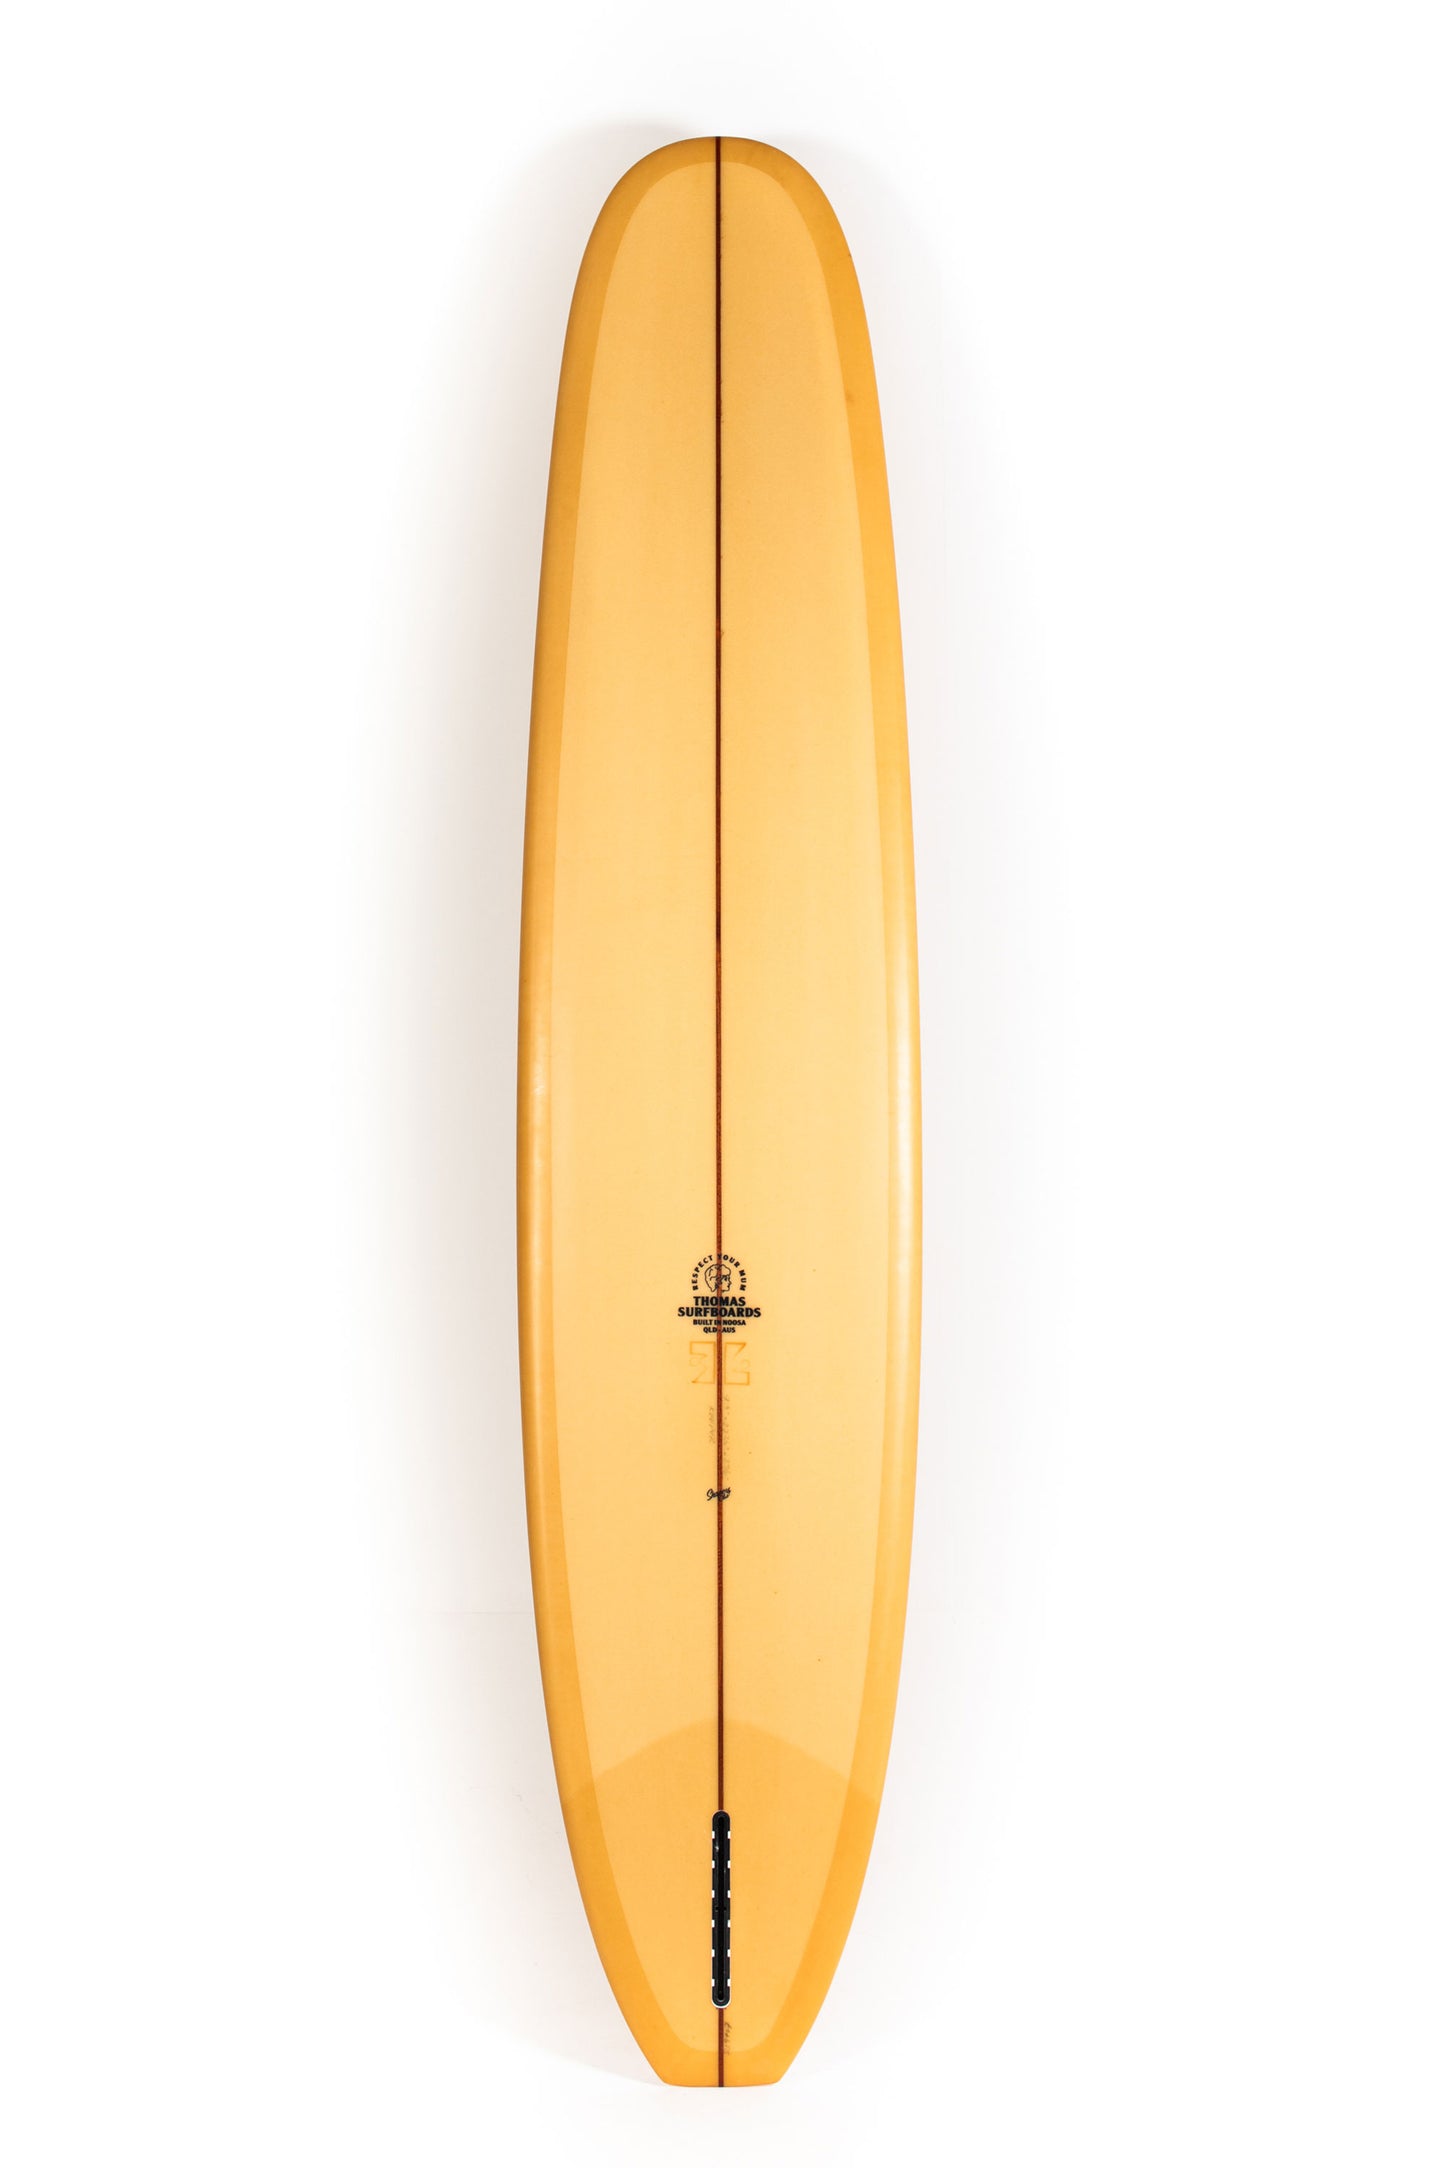 Pukas Surf Shop - Thomas Surfboards - KEEPER - 9'2" x 22 3/4 x 2 3/4 - KEEPER92